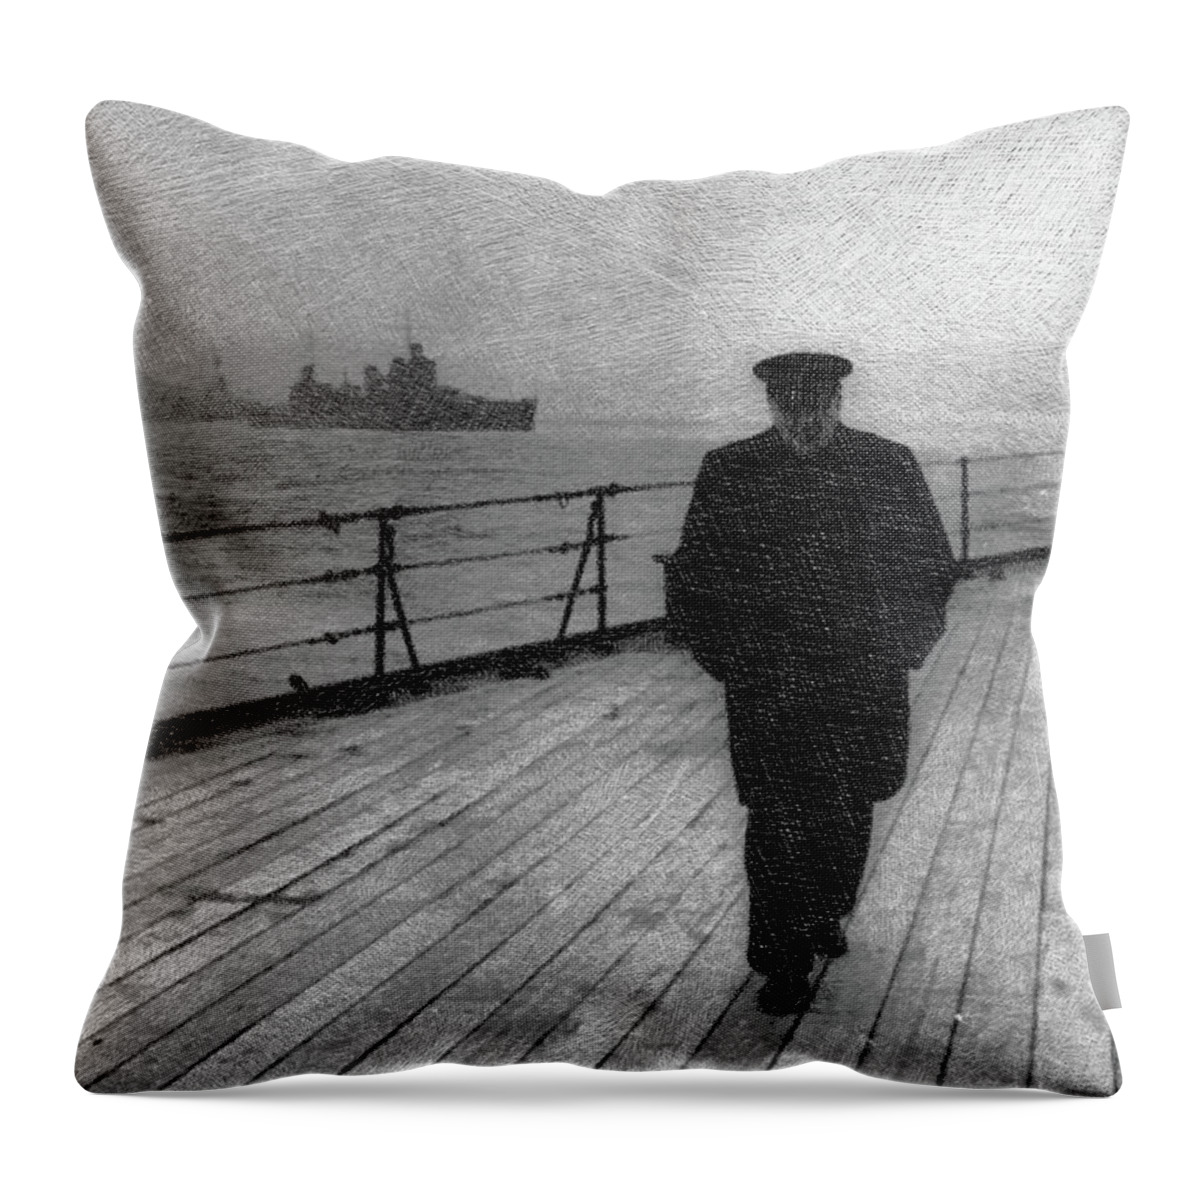  Winston Churchill Throw Pillow featuring the painting Winston Churchill On Ship by Tony Rubino